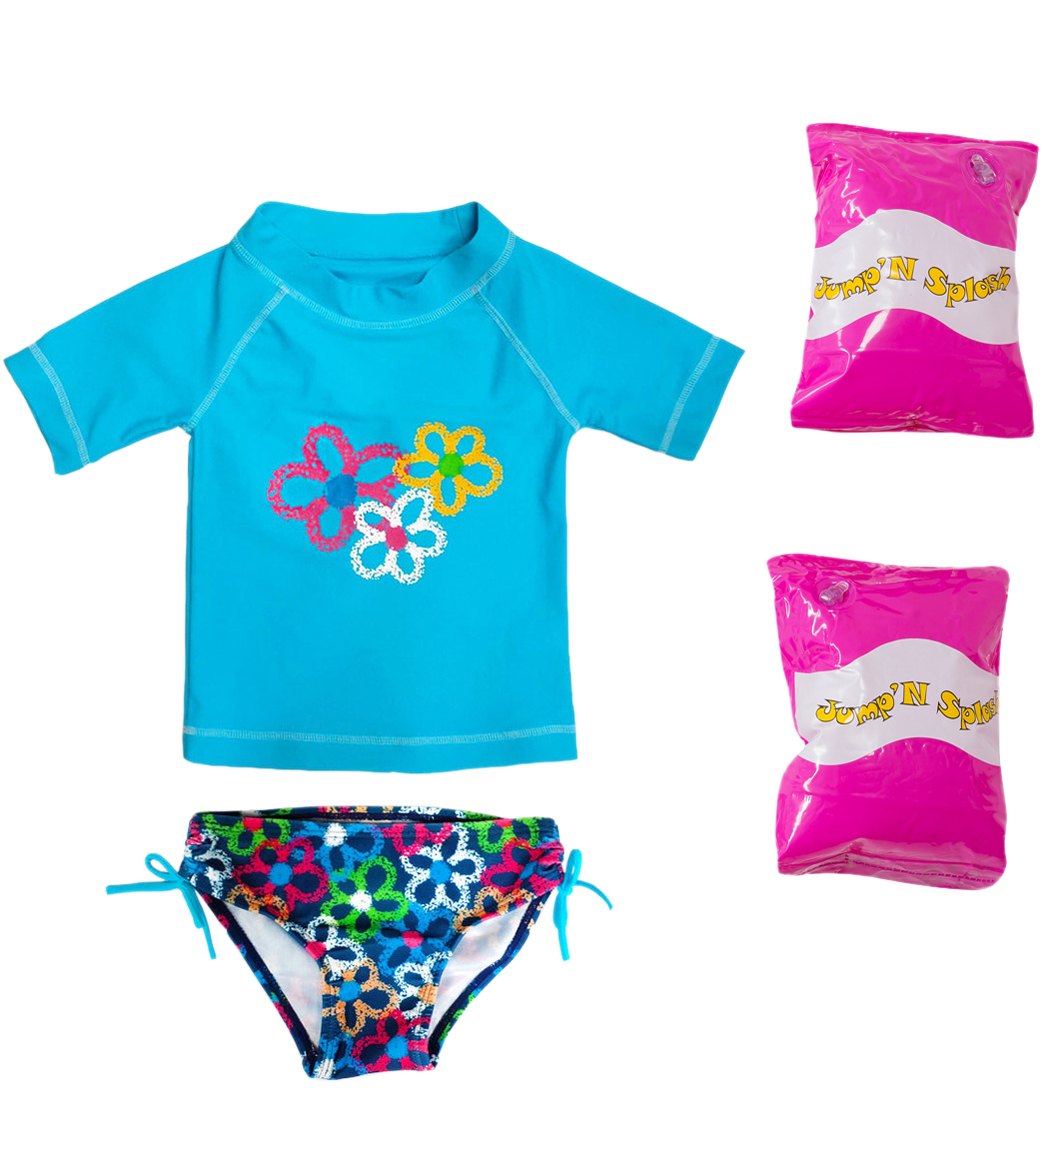 Jump N Splash Toddler Girls' Flower Power Two-Piece Short Sleeve Rashguard Set W/ Free Floaties 2T-3T - Multi 3T - Swimoutlet.com